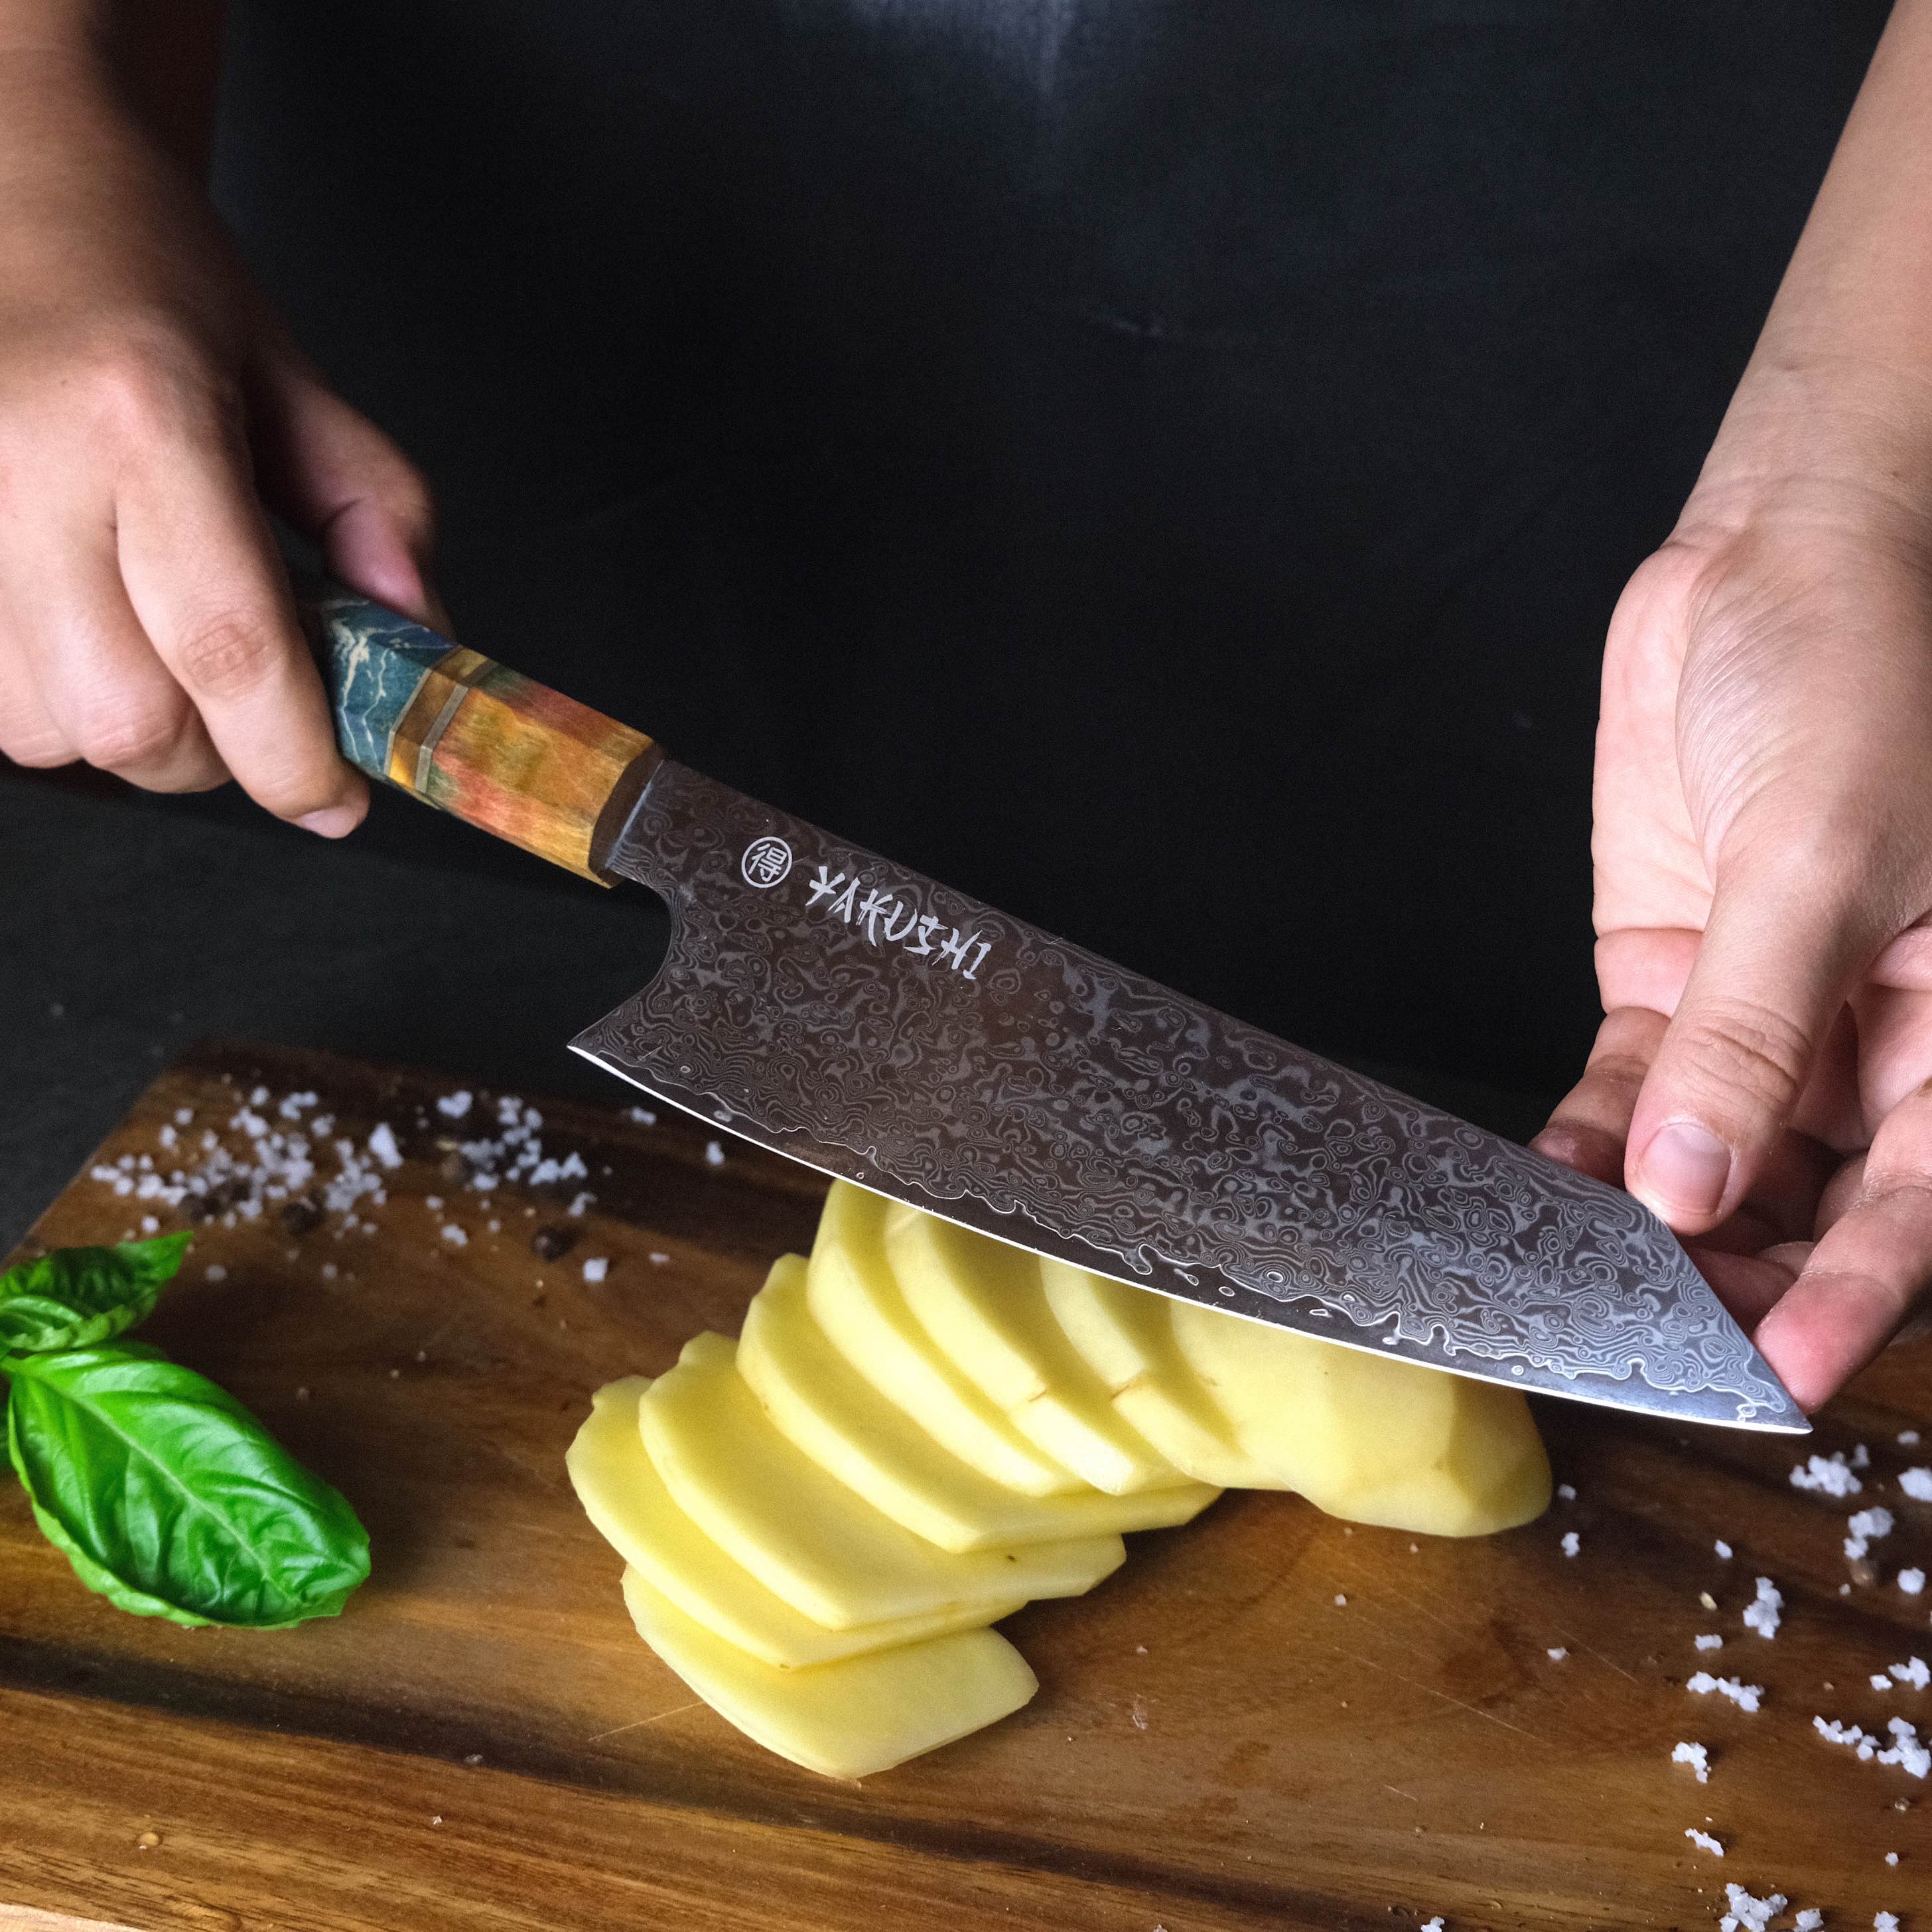 Kiritsuke Damascus Chef Knife